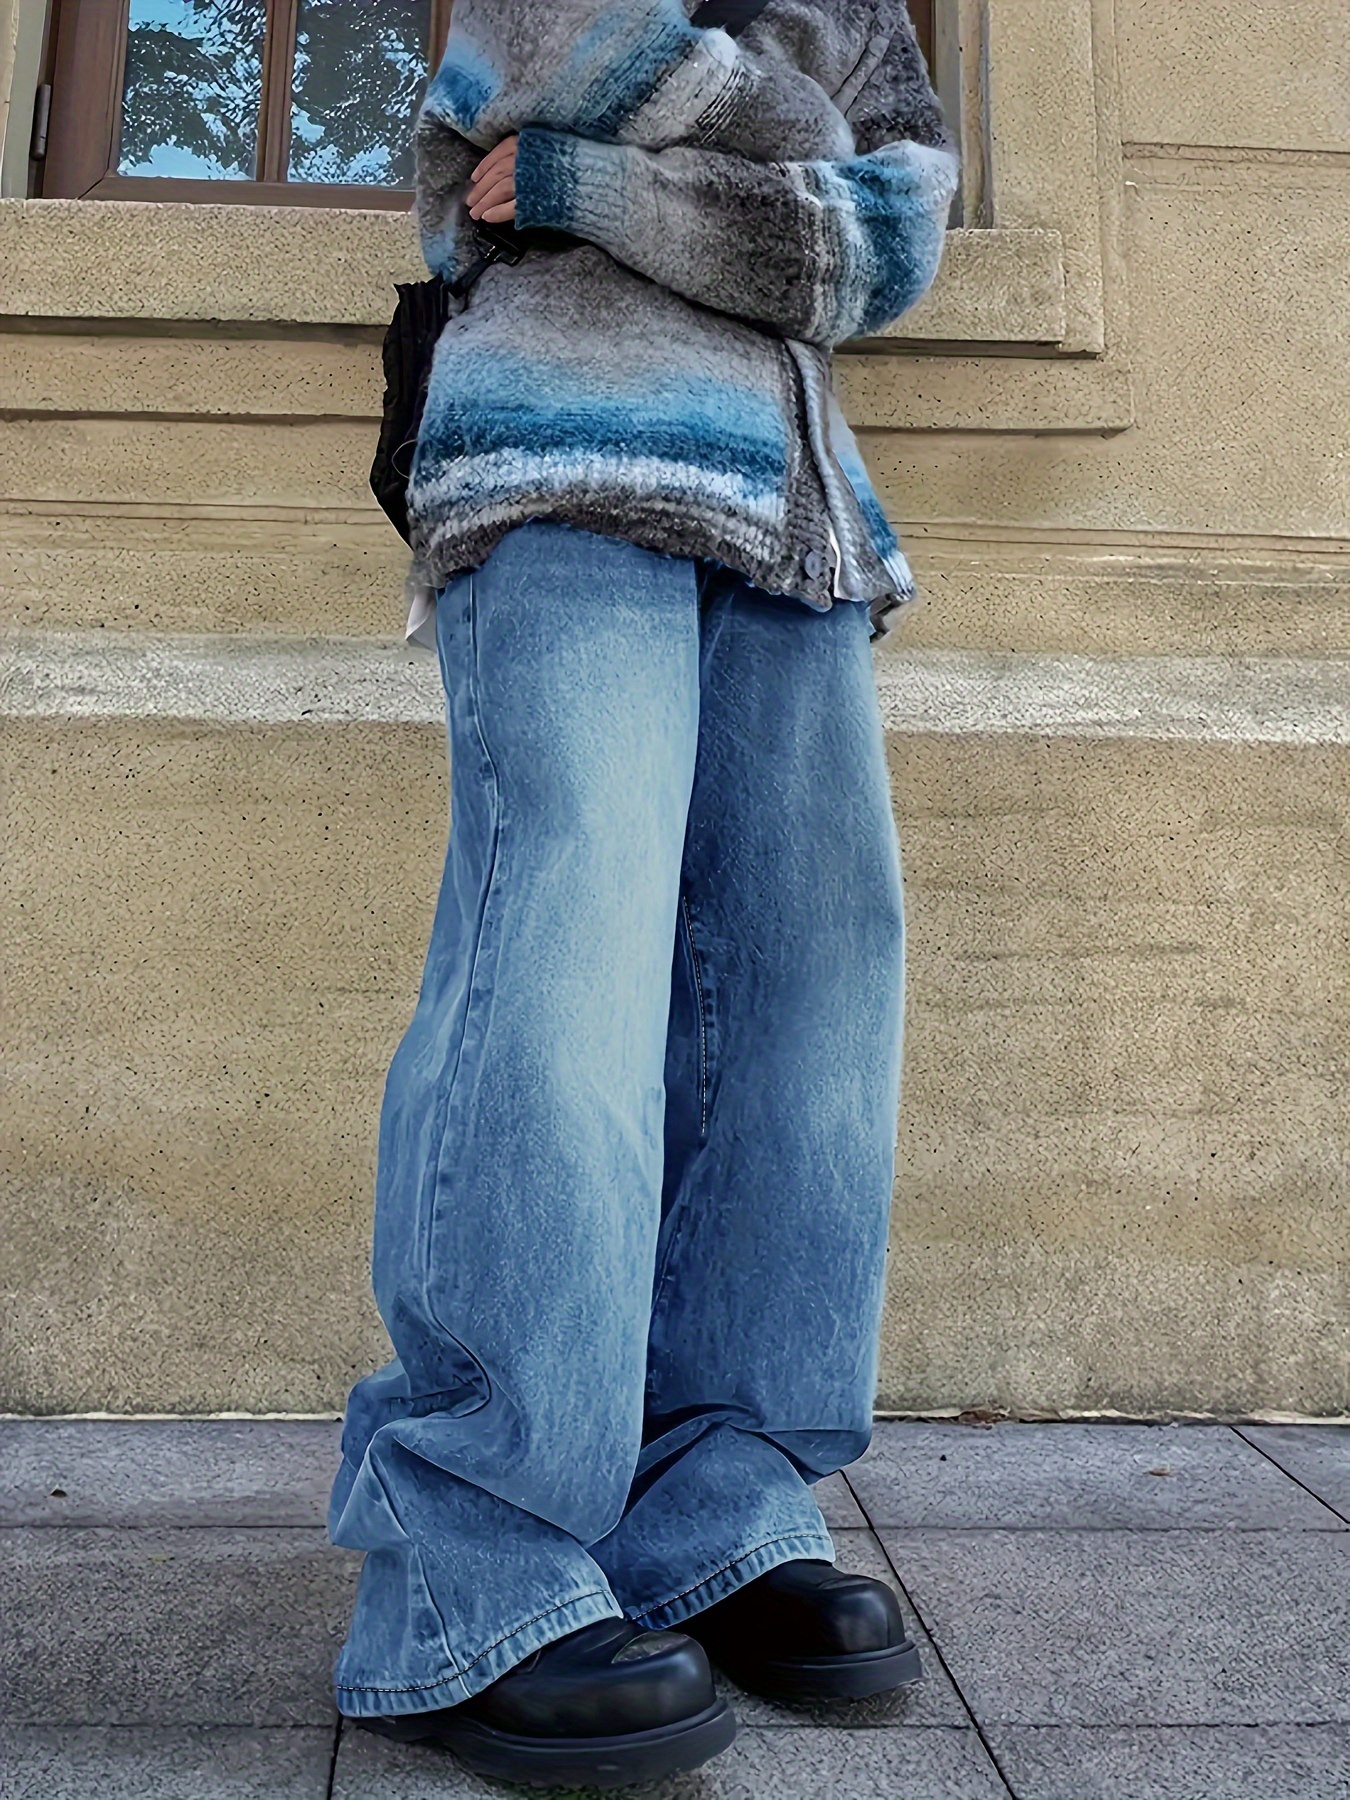 Loose Jeans Retro High Waist Wide Leg Jeans Women's Blue Street Fashion  Straight Pants (Color : Light Blue, Size : Small)